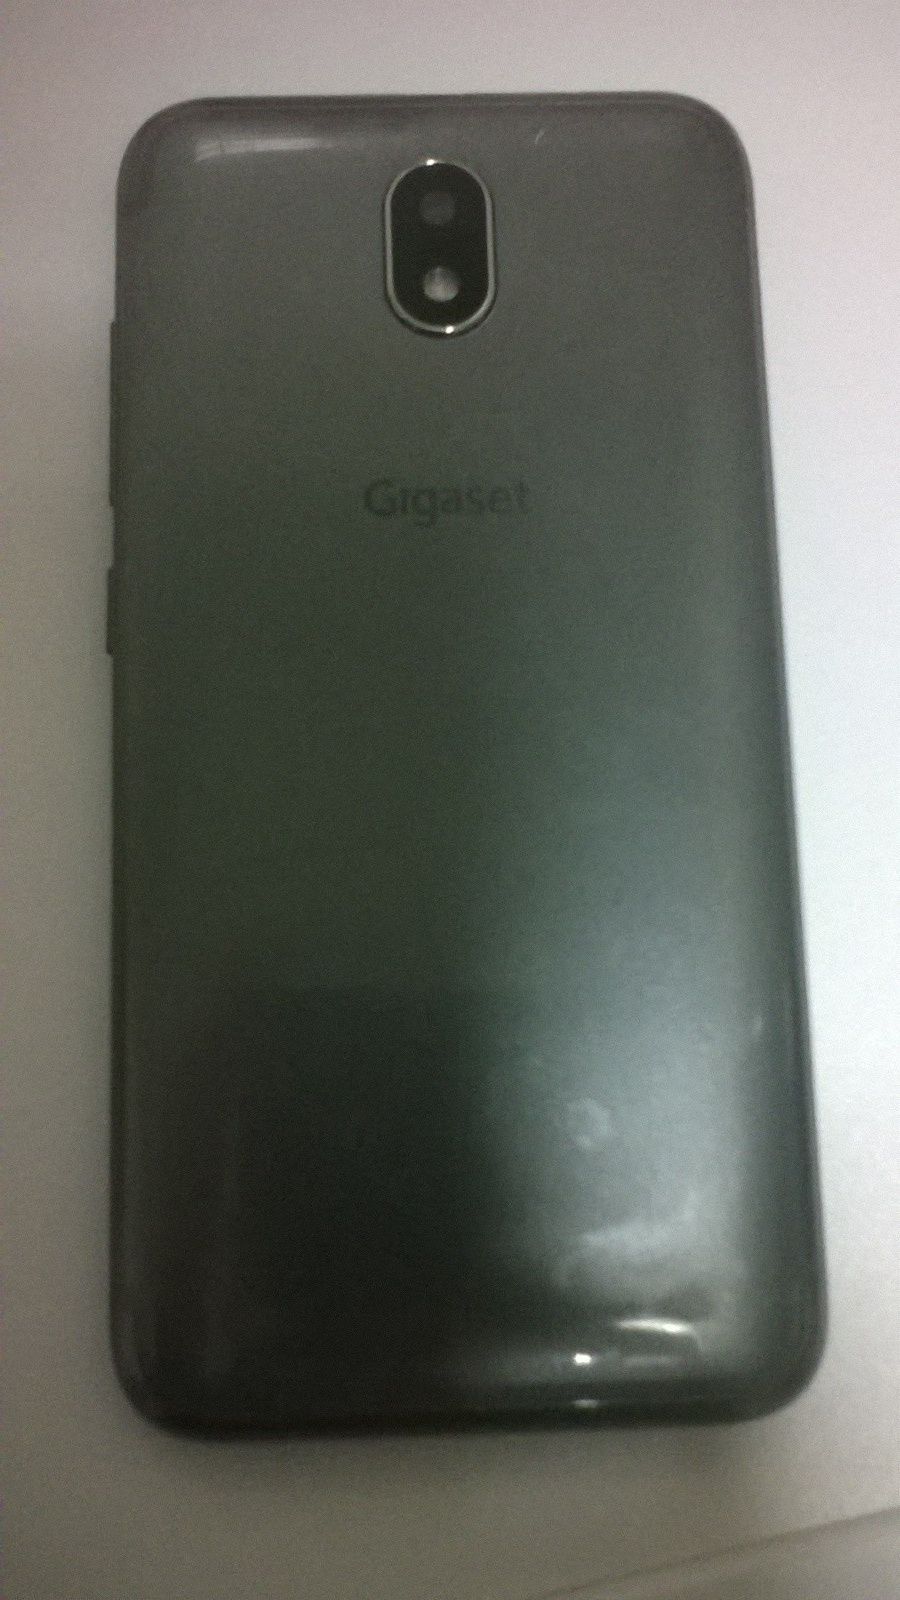 Vand telefonul mobil Gigaset eu GS80